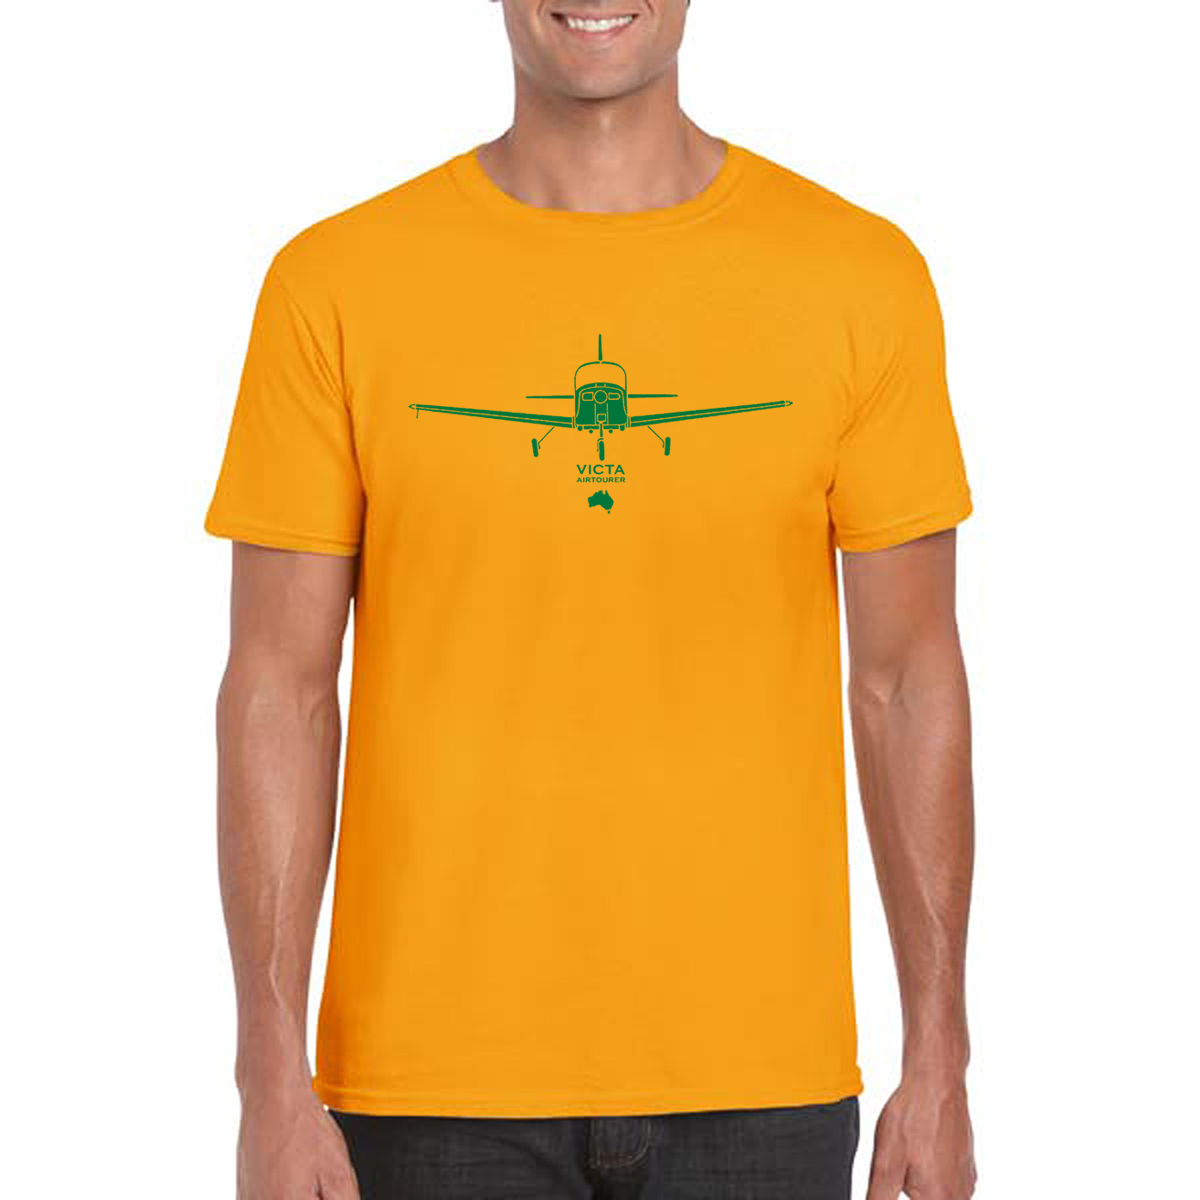 VICTA AIRTOURER T-Shirt